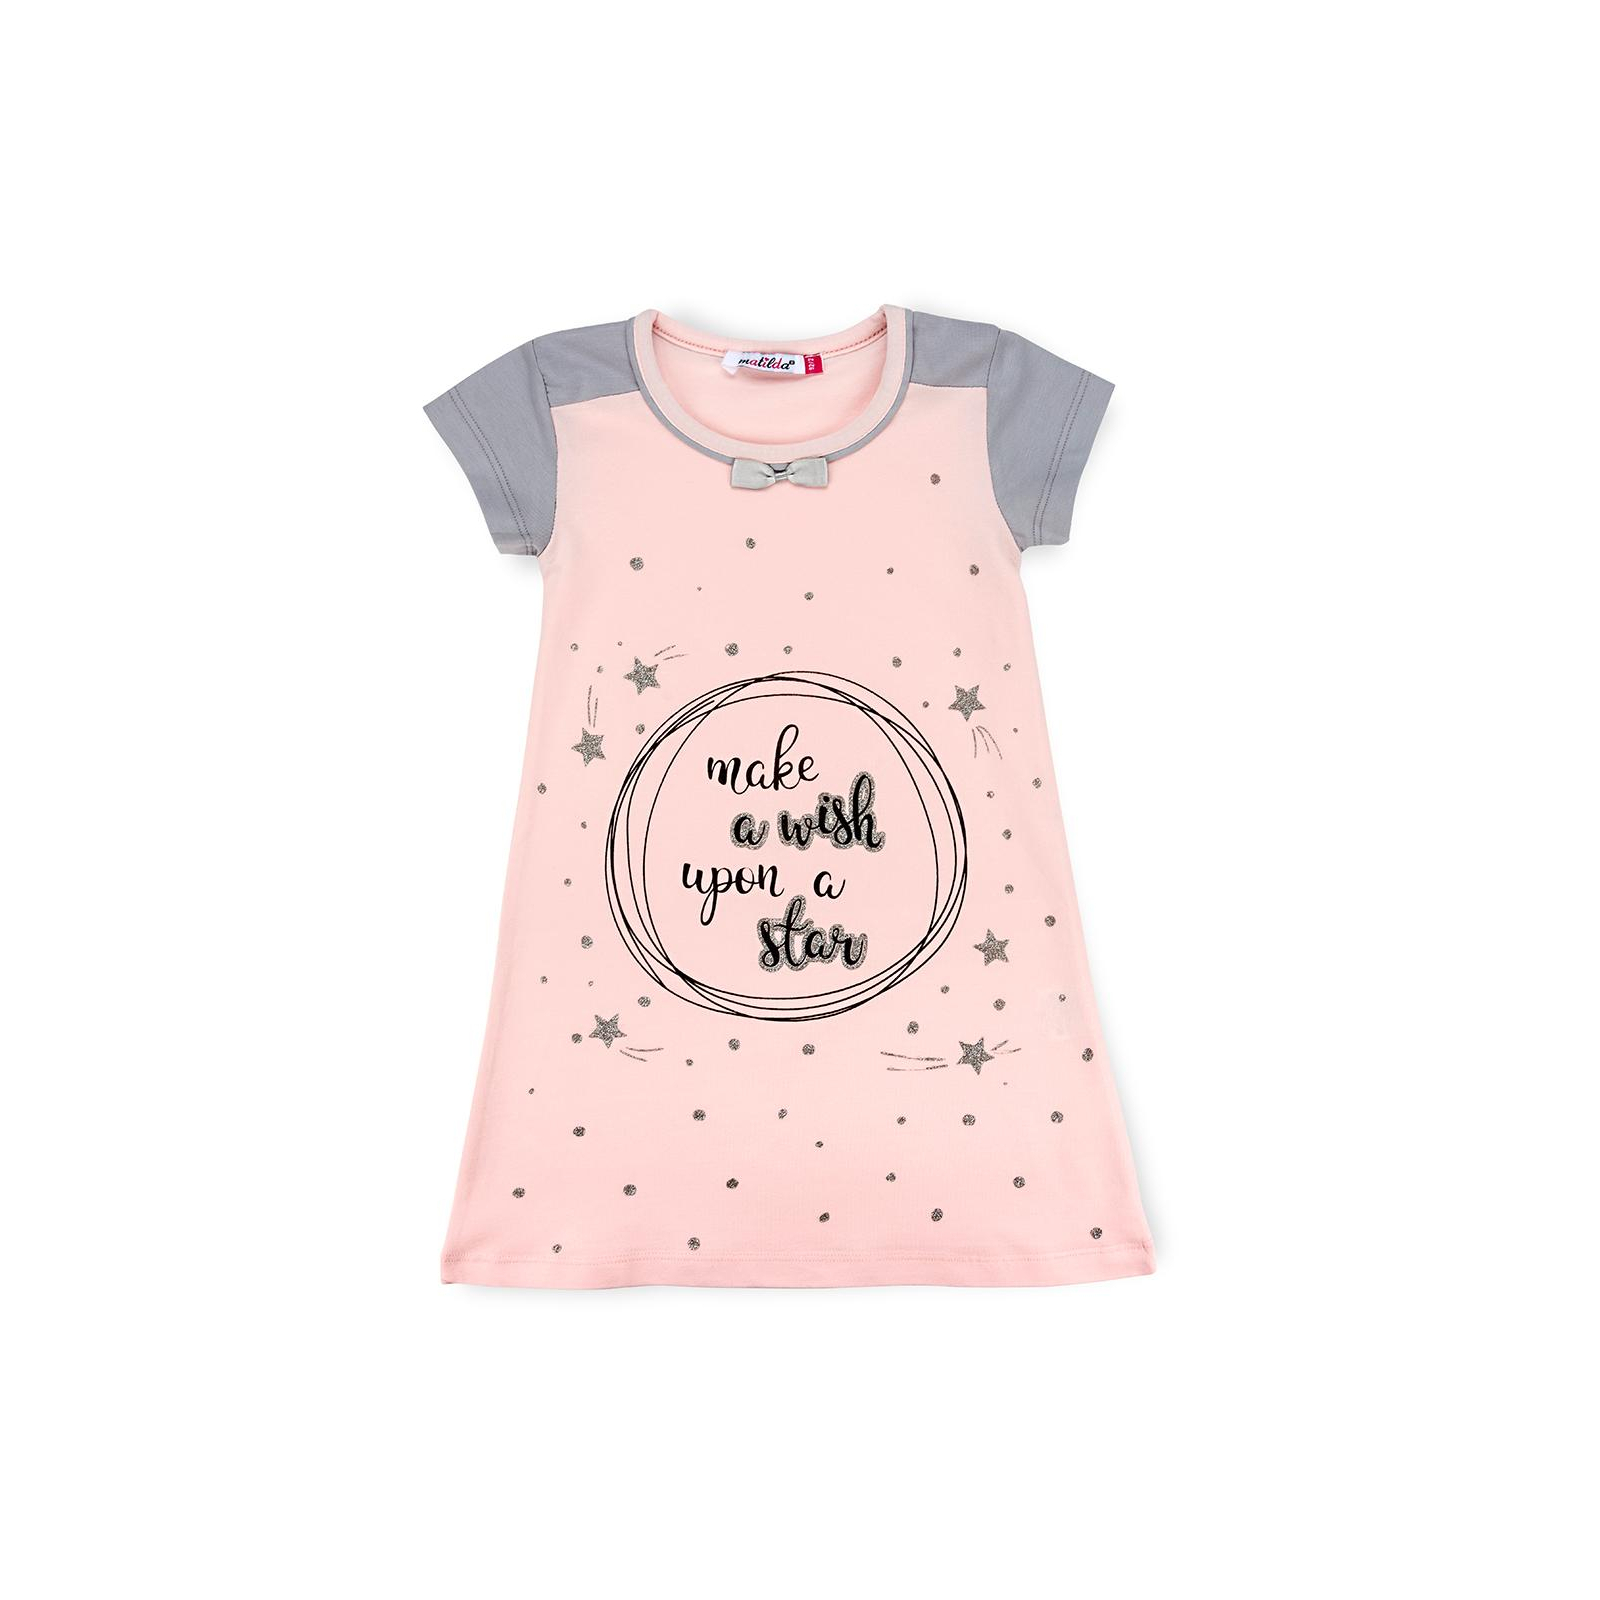 Піжама Matilda сорочка Із зірочкамі (7992-2-98G-pink)